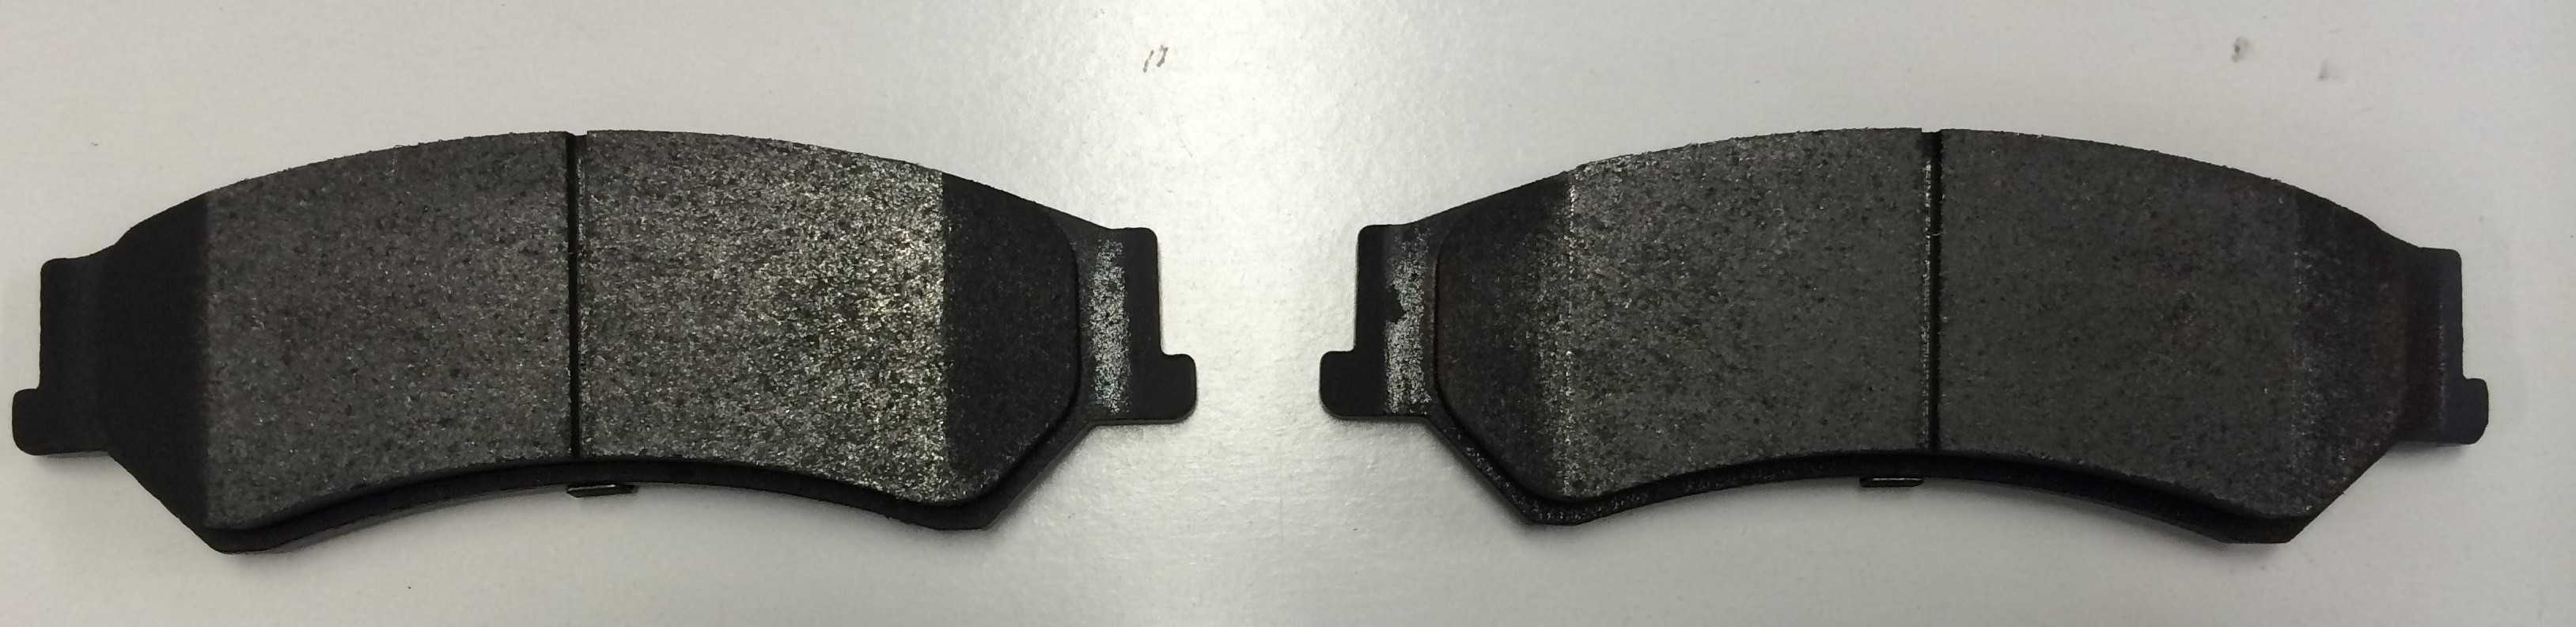 Brake pads: organic, semi-metallic or ceramic? - official friction master® brakes brand site